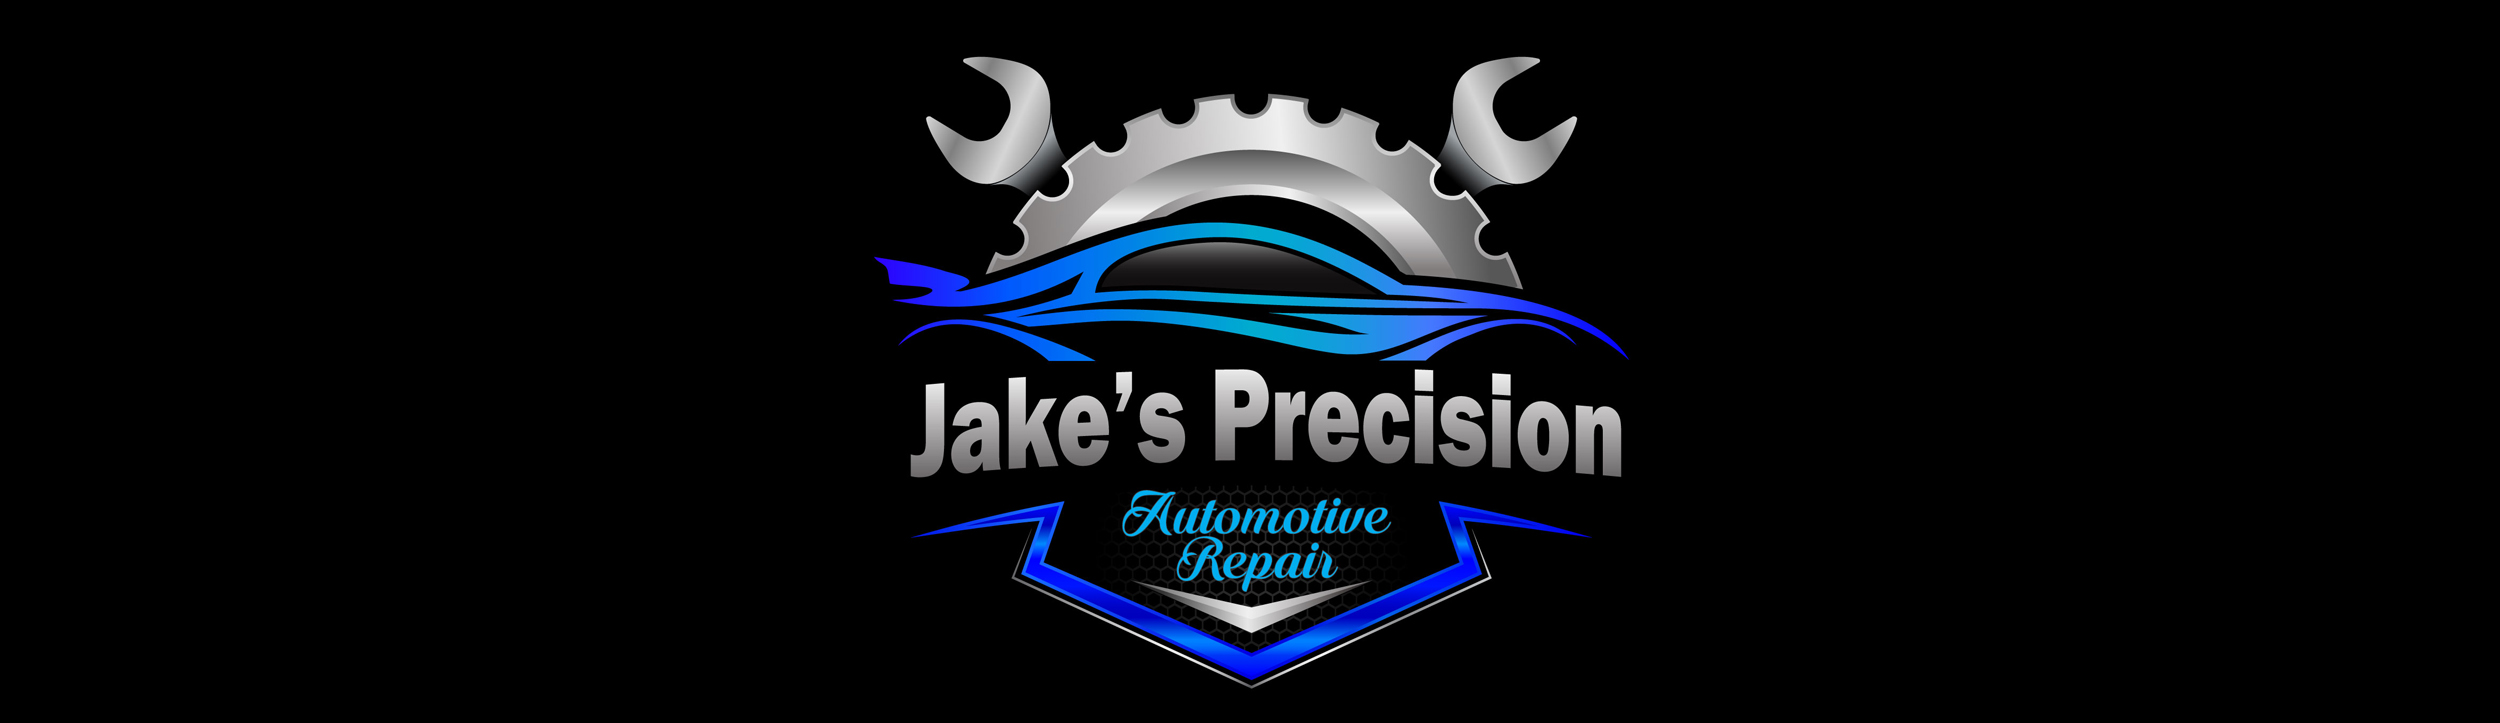 Jake's Precision Automotive Repair